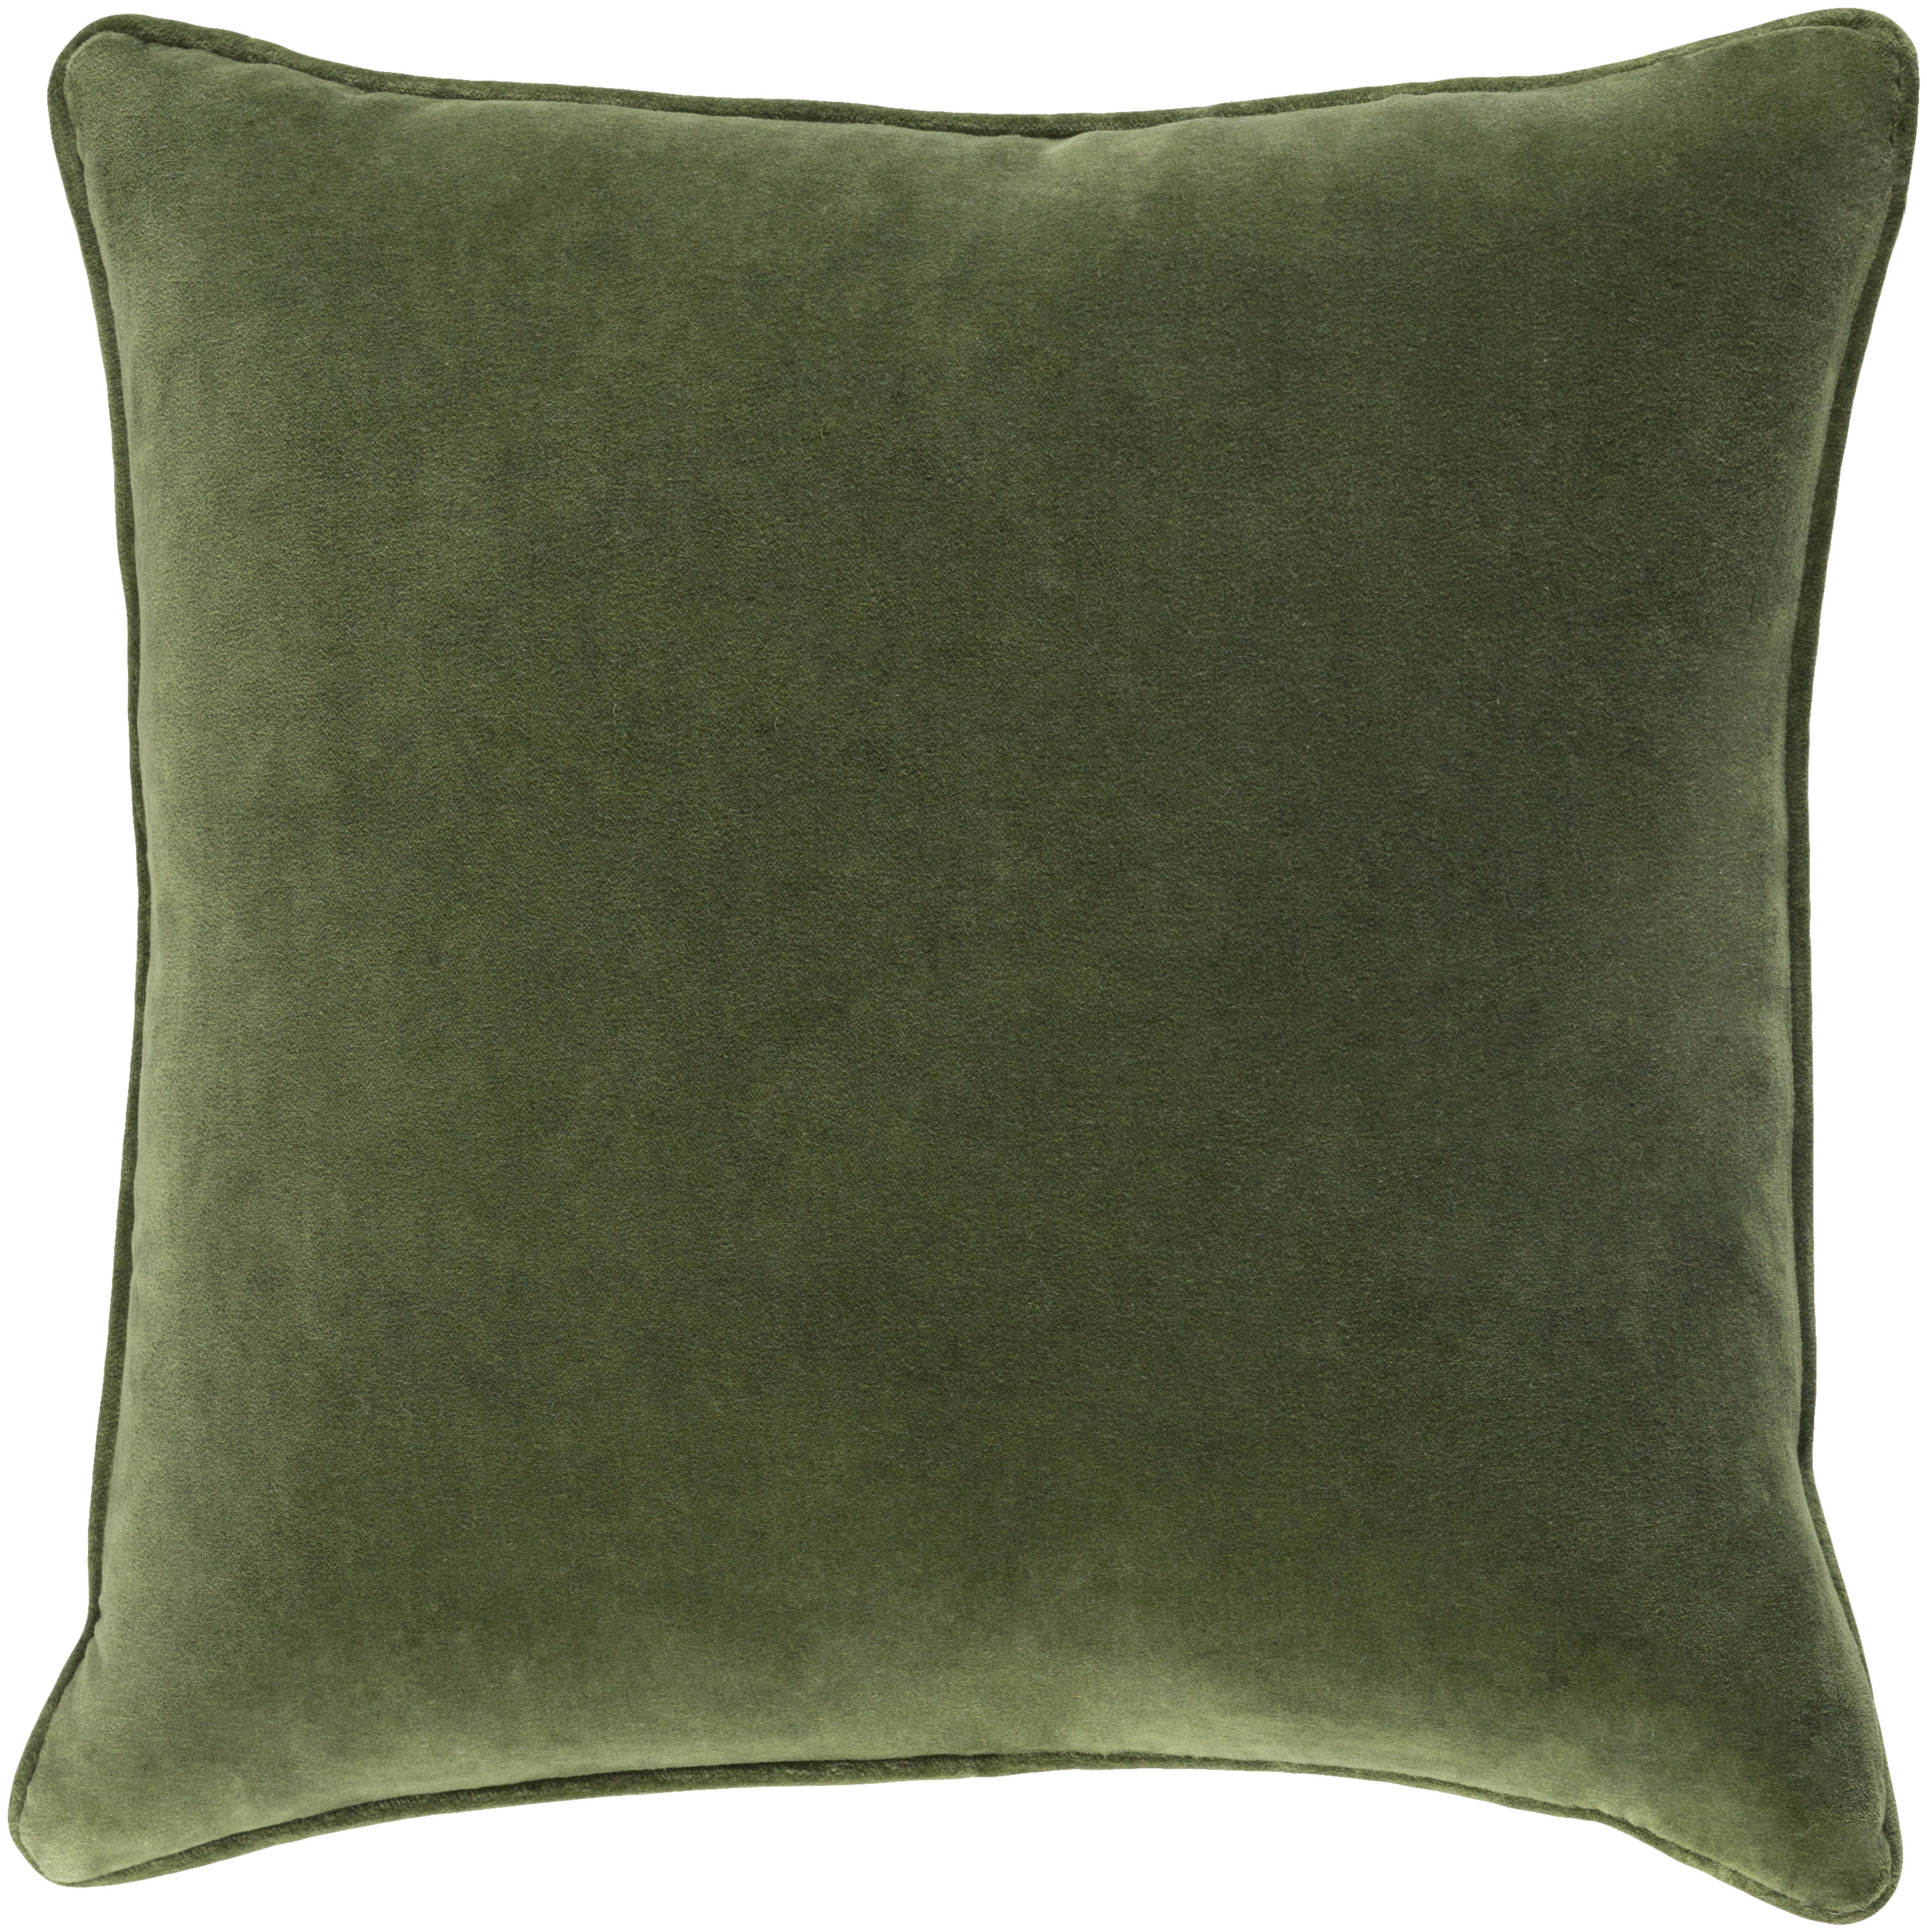 Safflower Throw Pillow, 20" x 20", with down insert - Surya